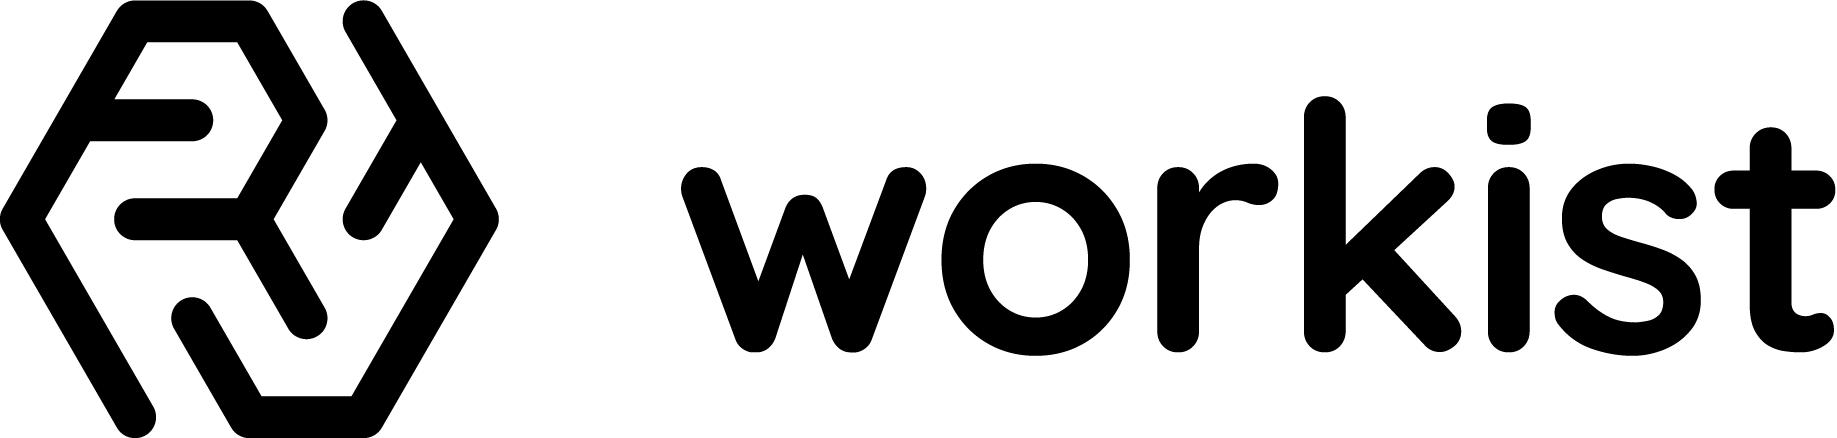 responsive image logo